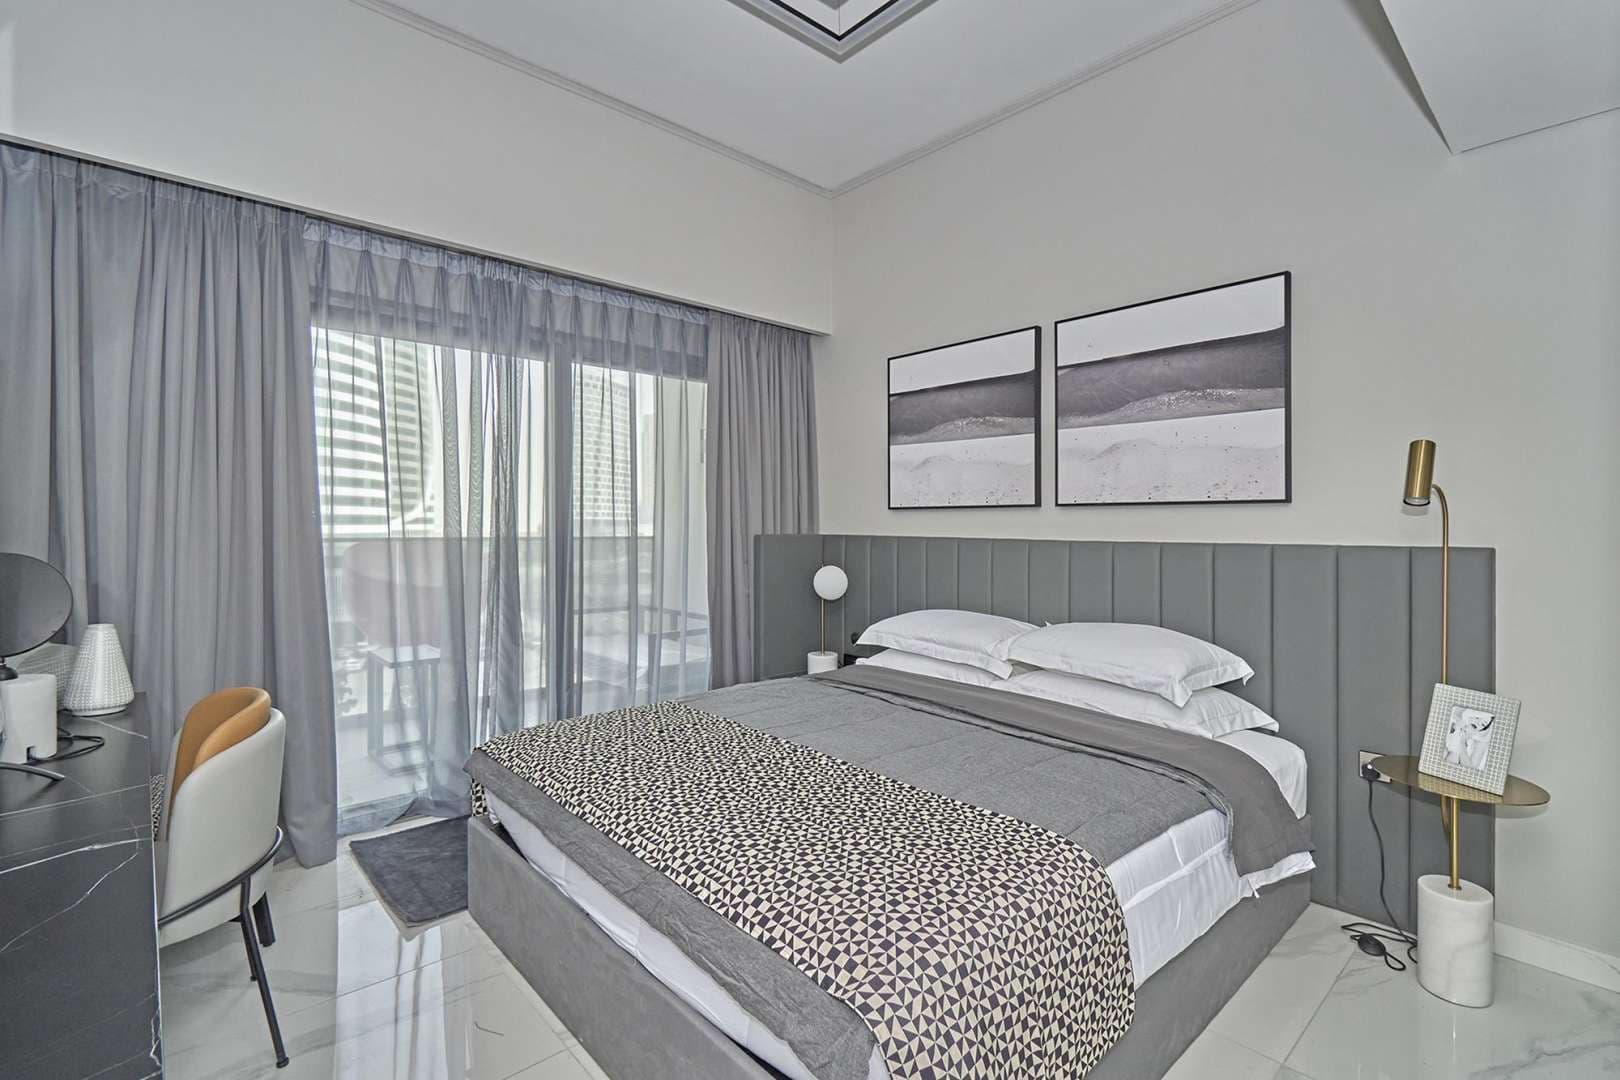 2 Bedroom Apartment For Sale Mag 318 Lp06016 12f515834996df00.jpg